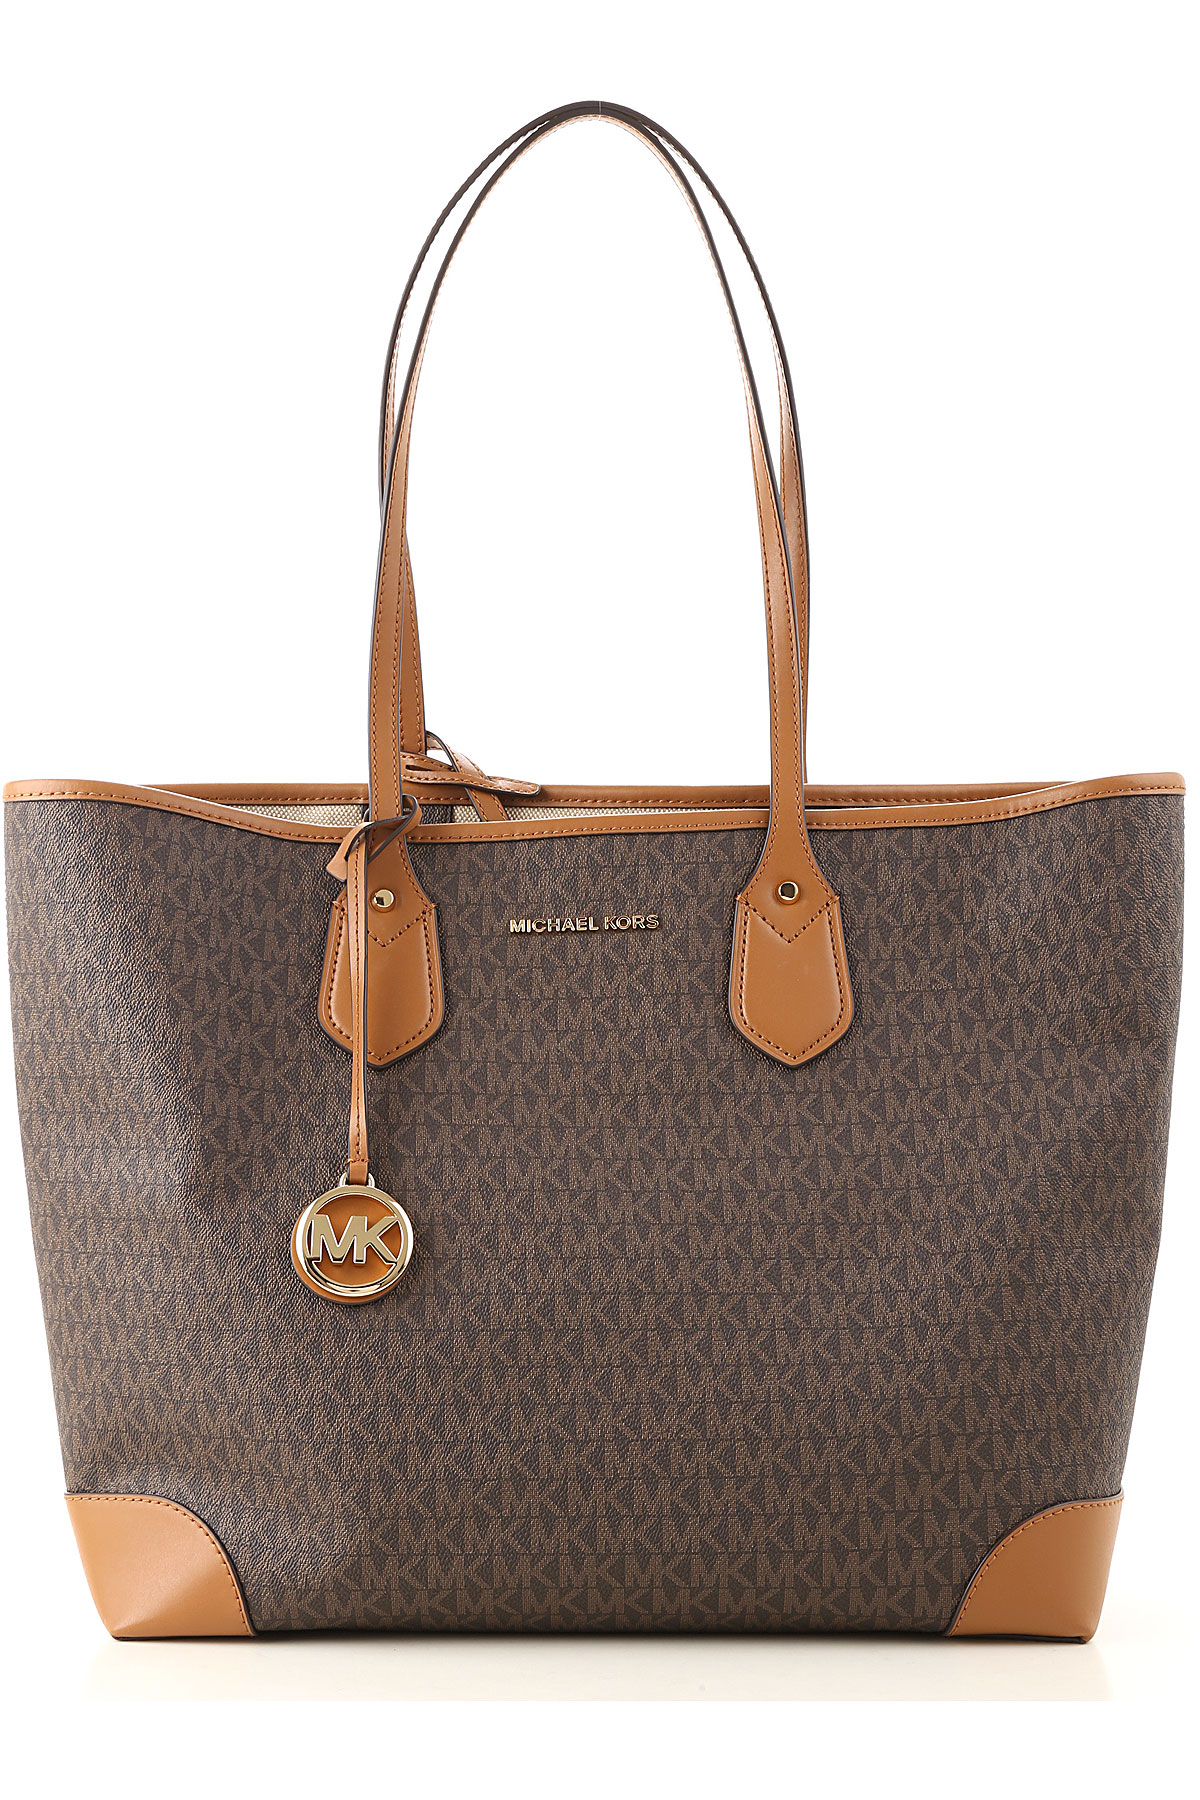 Handbags Michael Kors, Style code: 30s9gv0t9b--